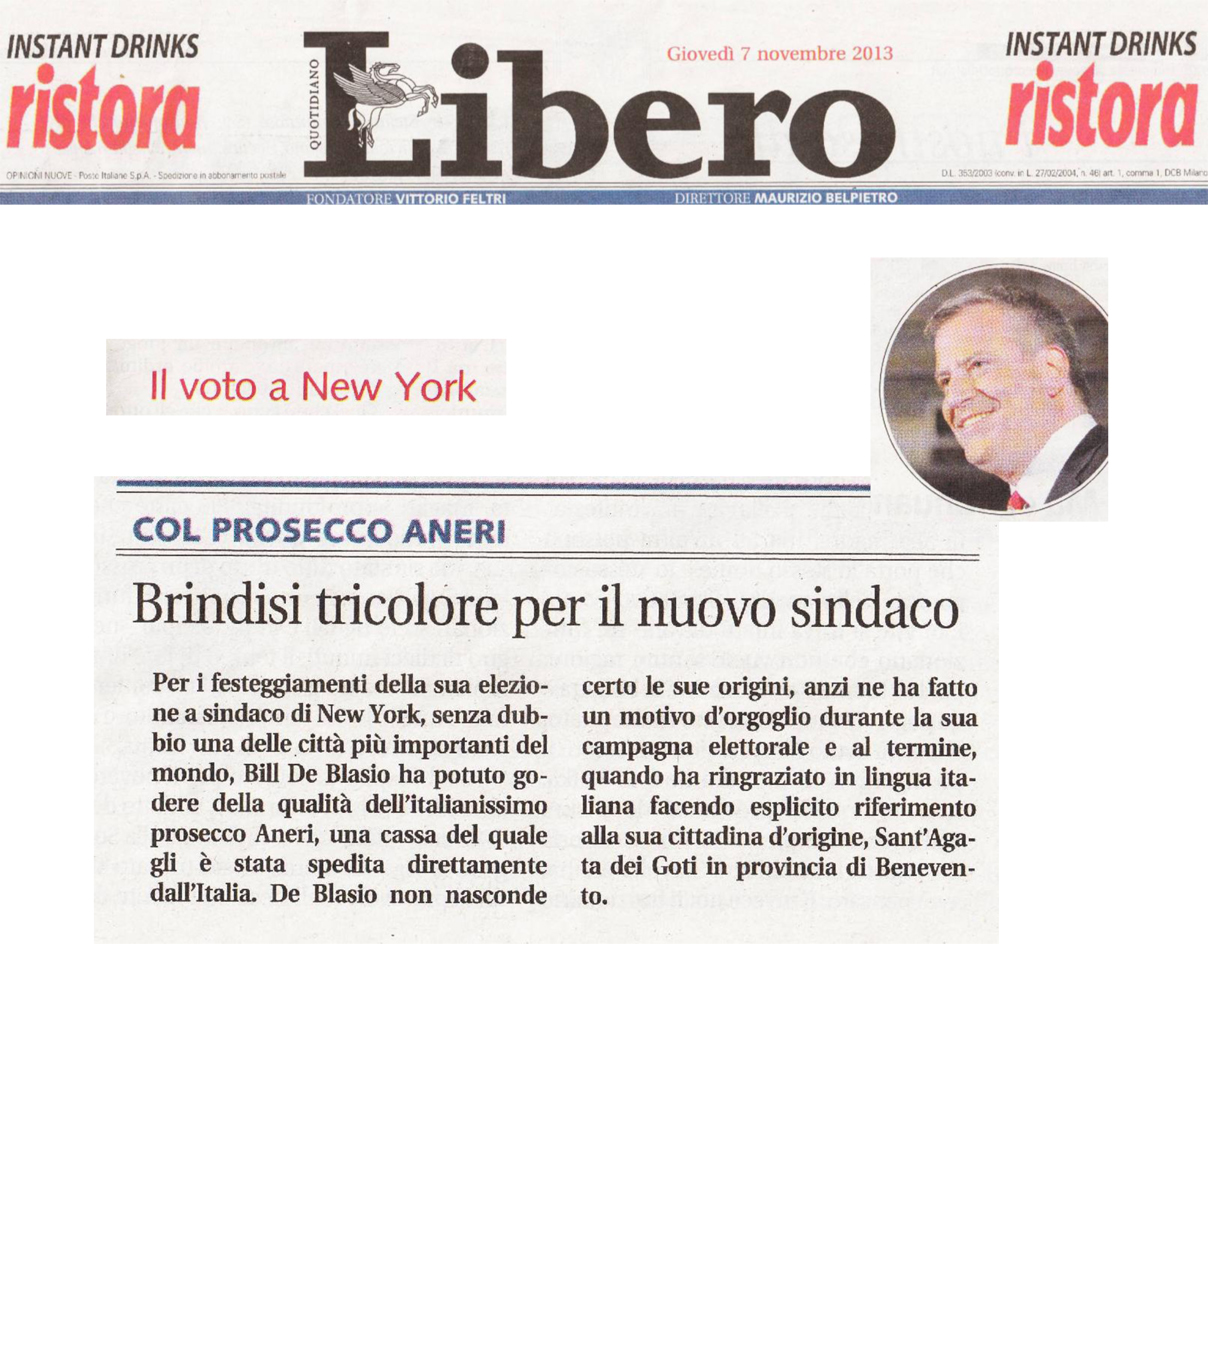 LIBERO-BRINDISI PROSECCO SINDACO NEW YORK